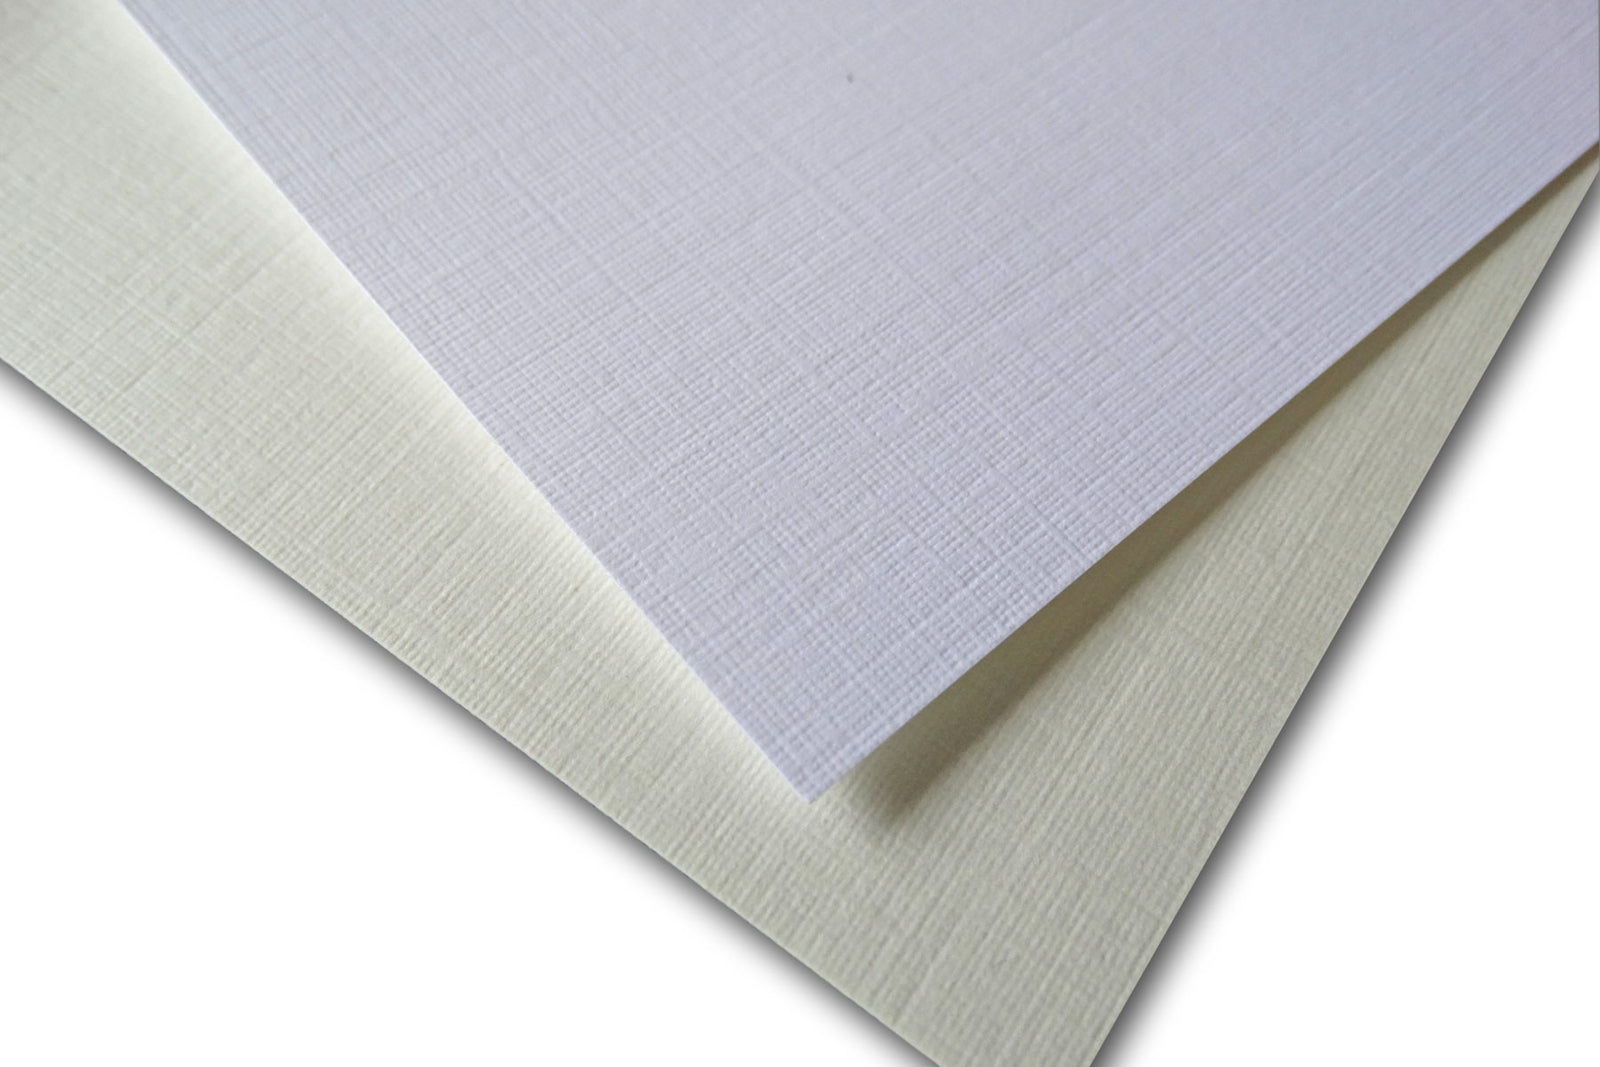 Neenah – Classic Linen Text – Donahue Paper Emporium